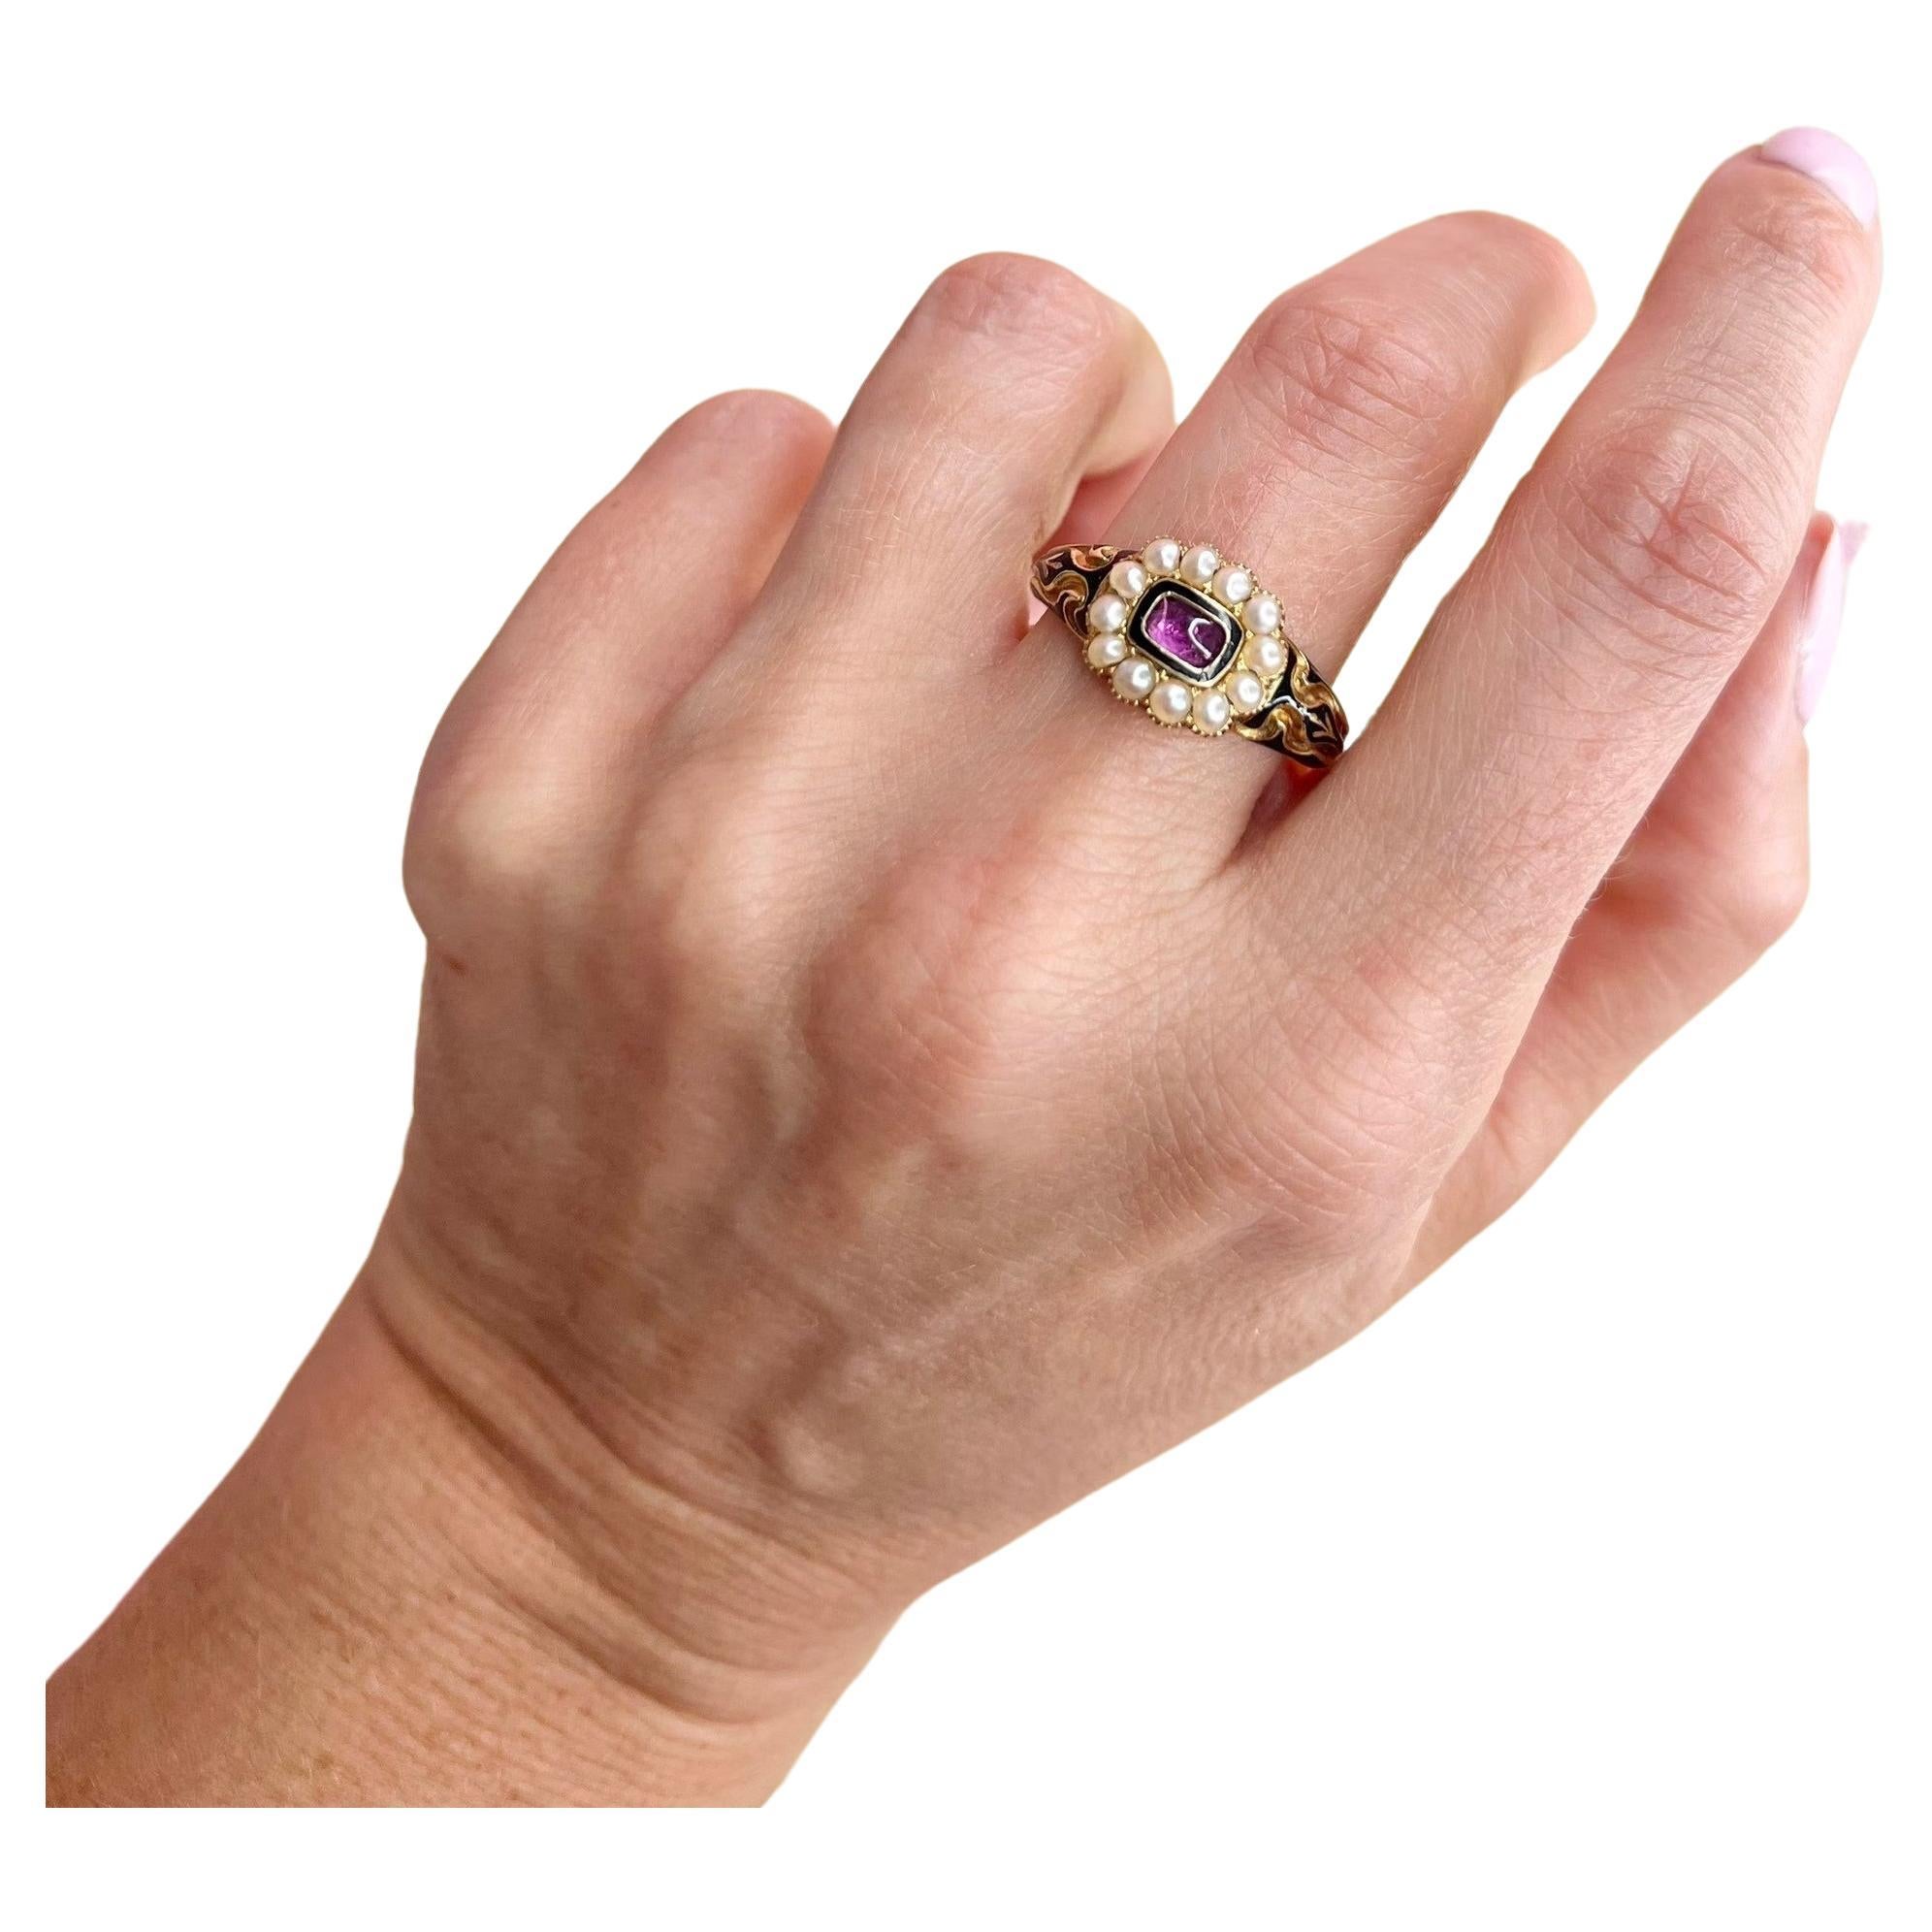 Antique 18ct Gold Victorian cabachon Garnet Memorial Ring with Black Enamel 